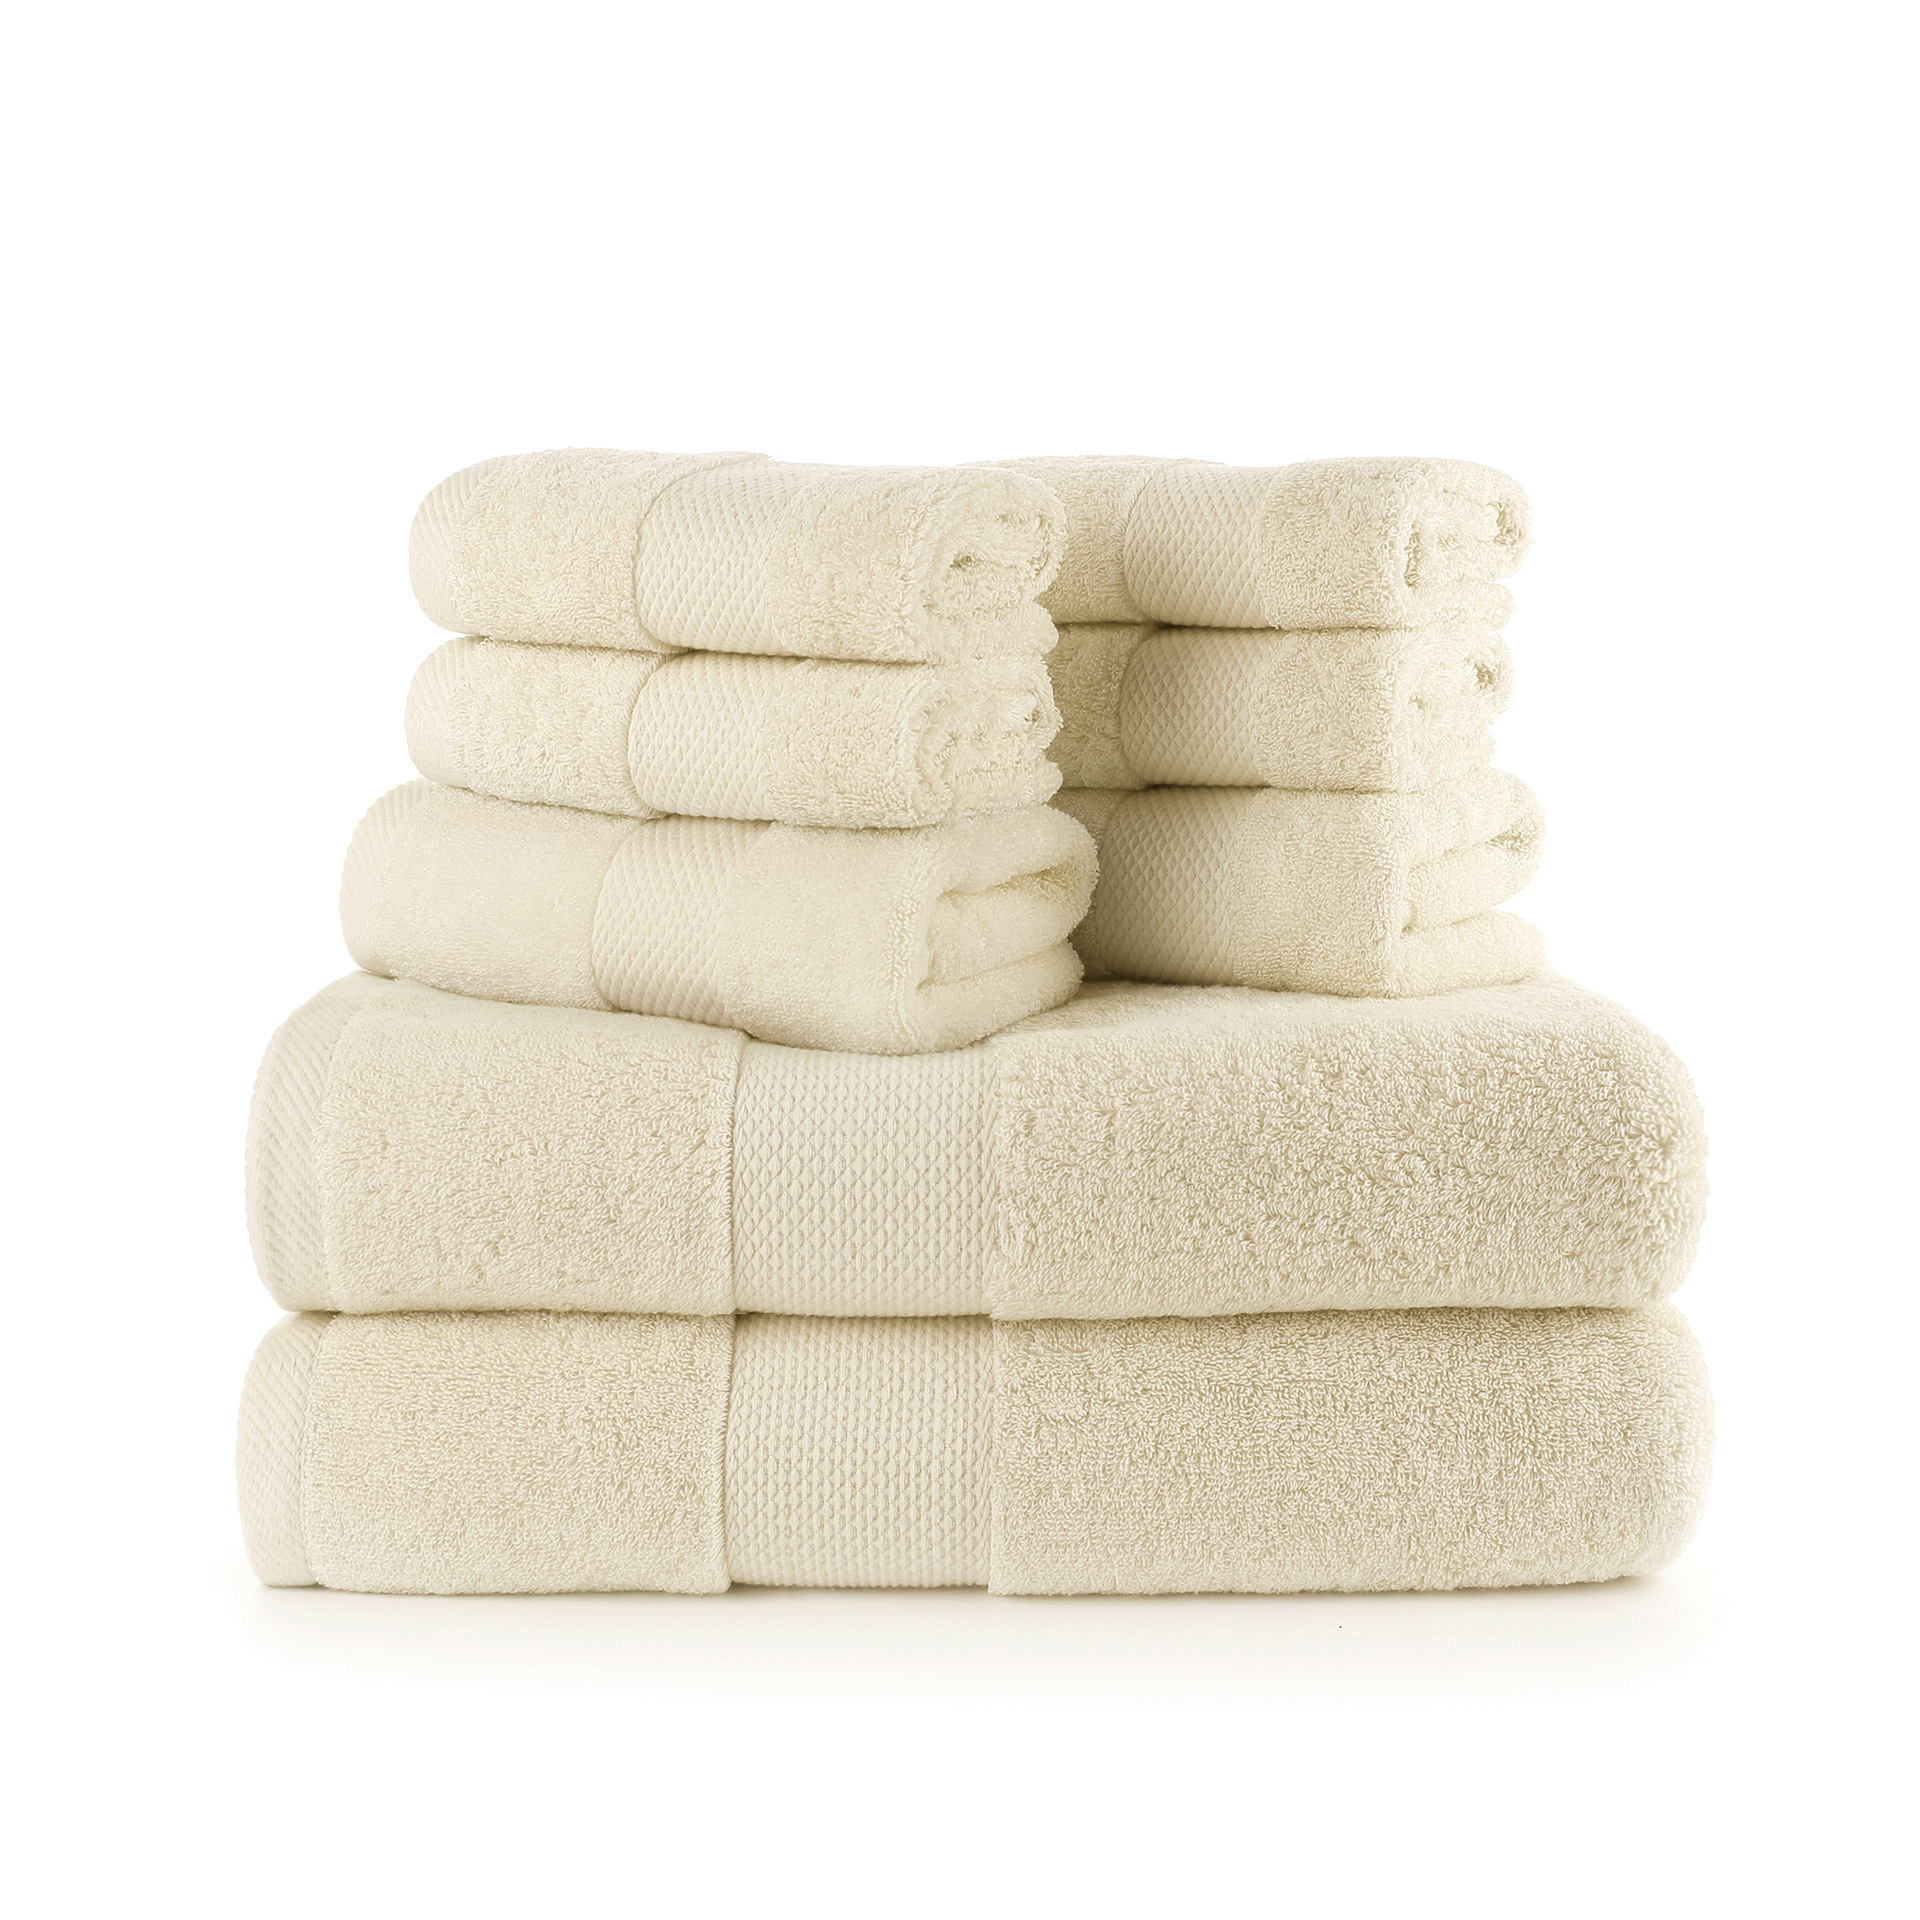 8 Pcs Cotton Bath Towel Set Bath Hand Towels Washcloths